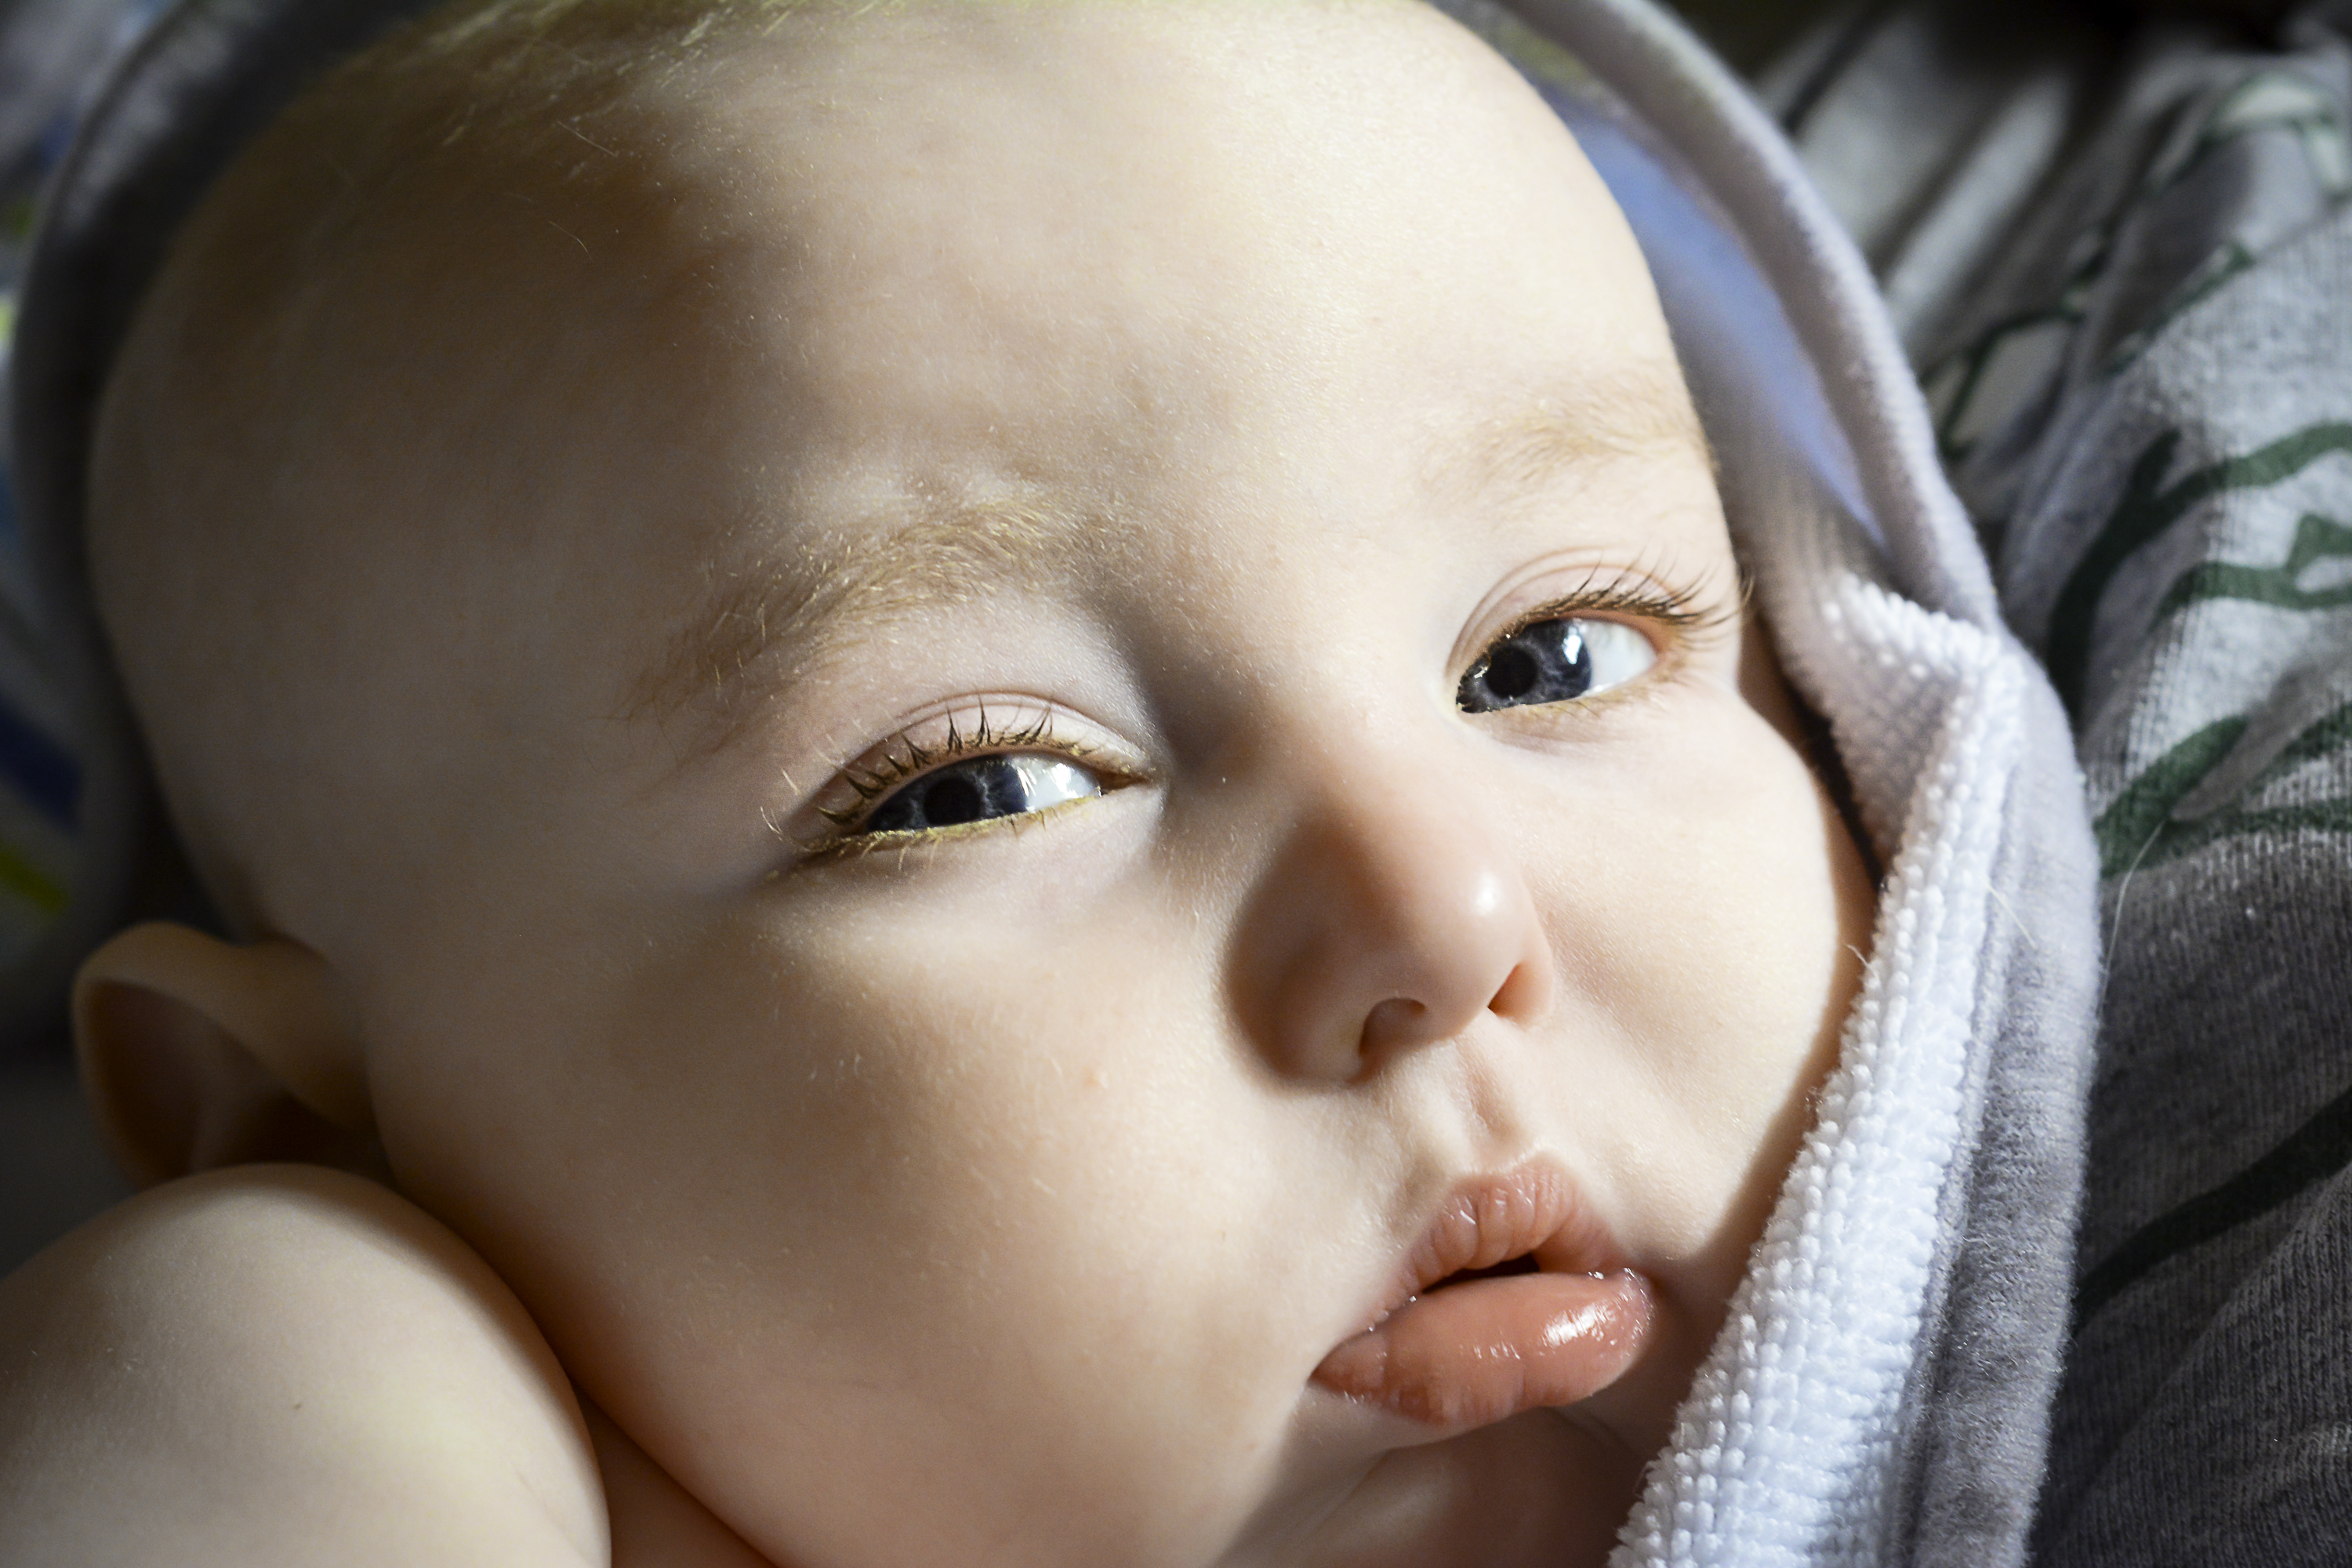 Infant diagnosed with terminal illness | newscentermaine.com